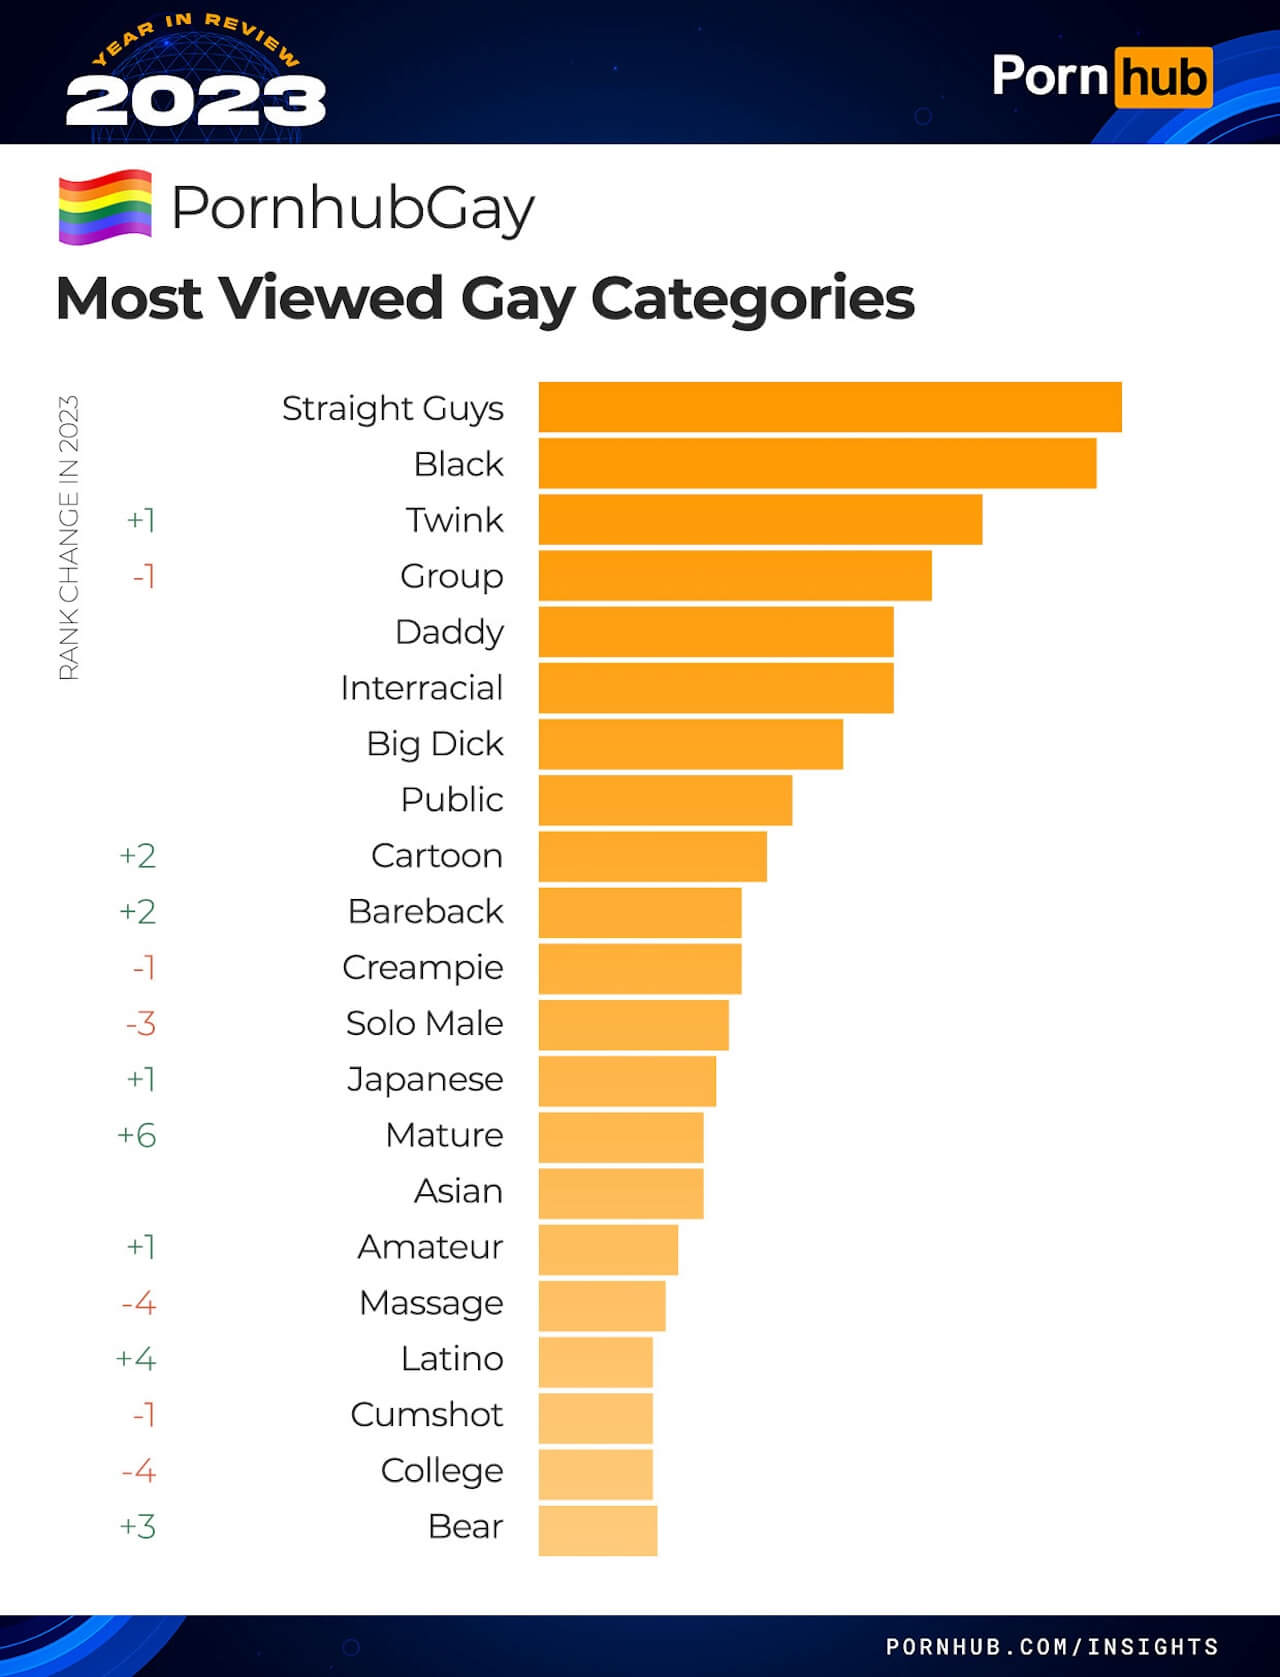 Pornhub 2023, Italia nona al mondo. Crollo durante Sanremo. Ecco i pornodivi gay più ricercati - pornhub insights 2023 year in review gay most viewed categories 1 - Gay.it